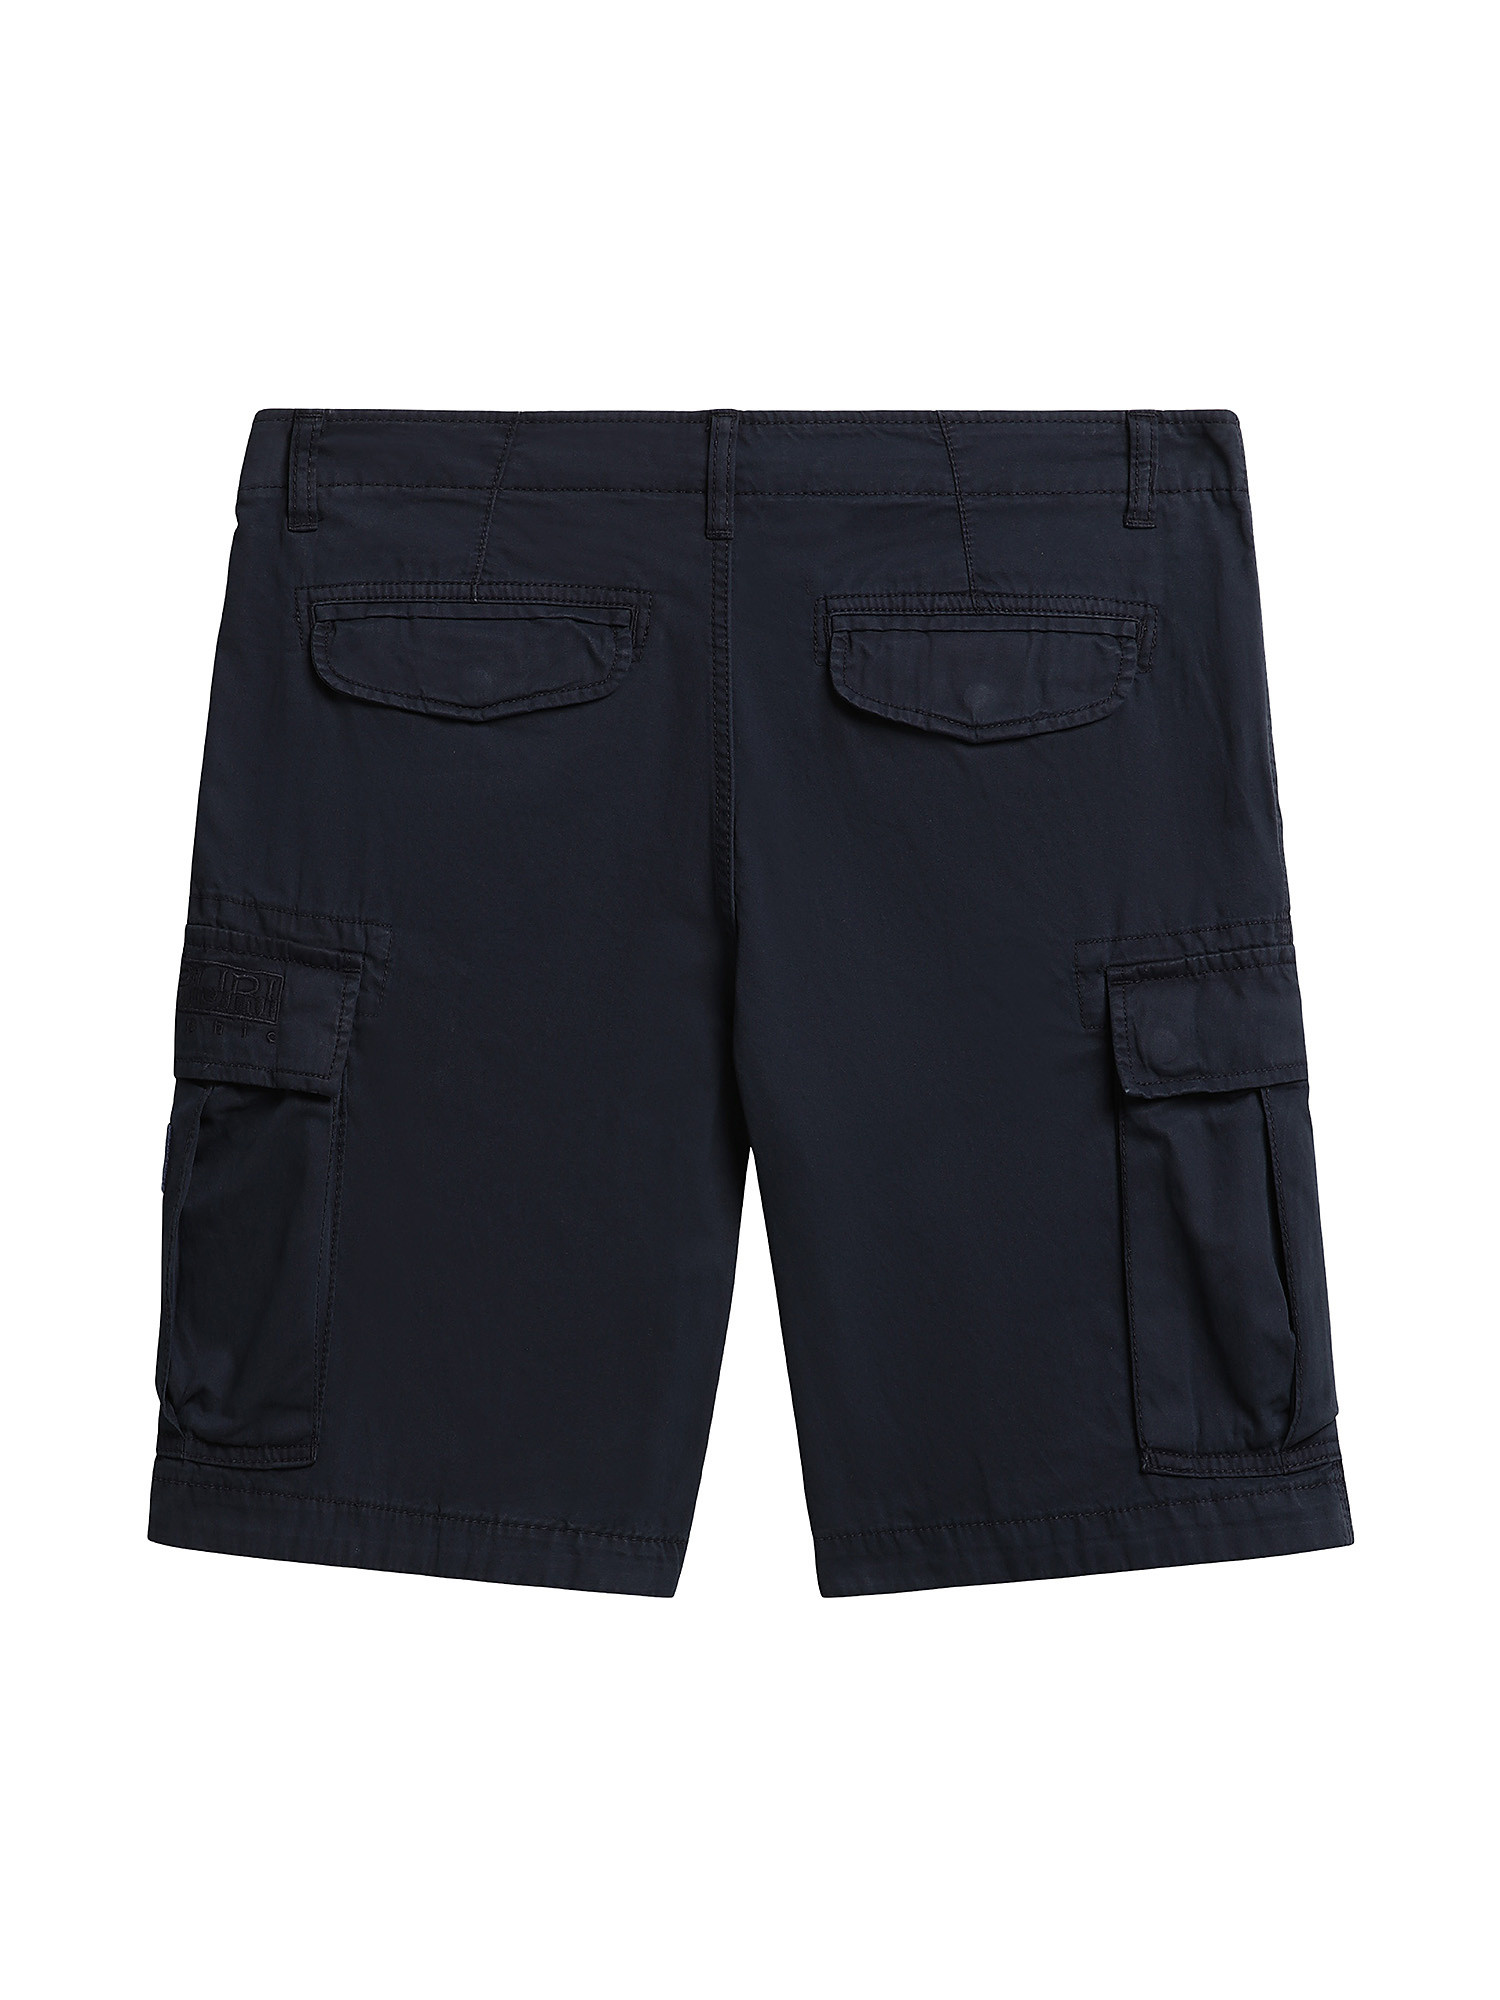 Bermuda Shorts Nus, Blue, large image number 1